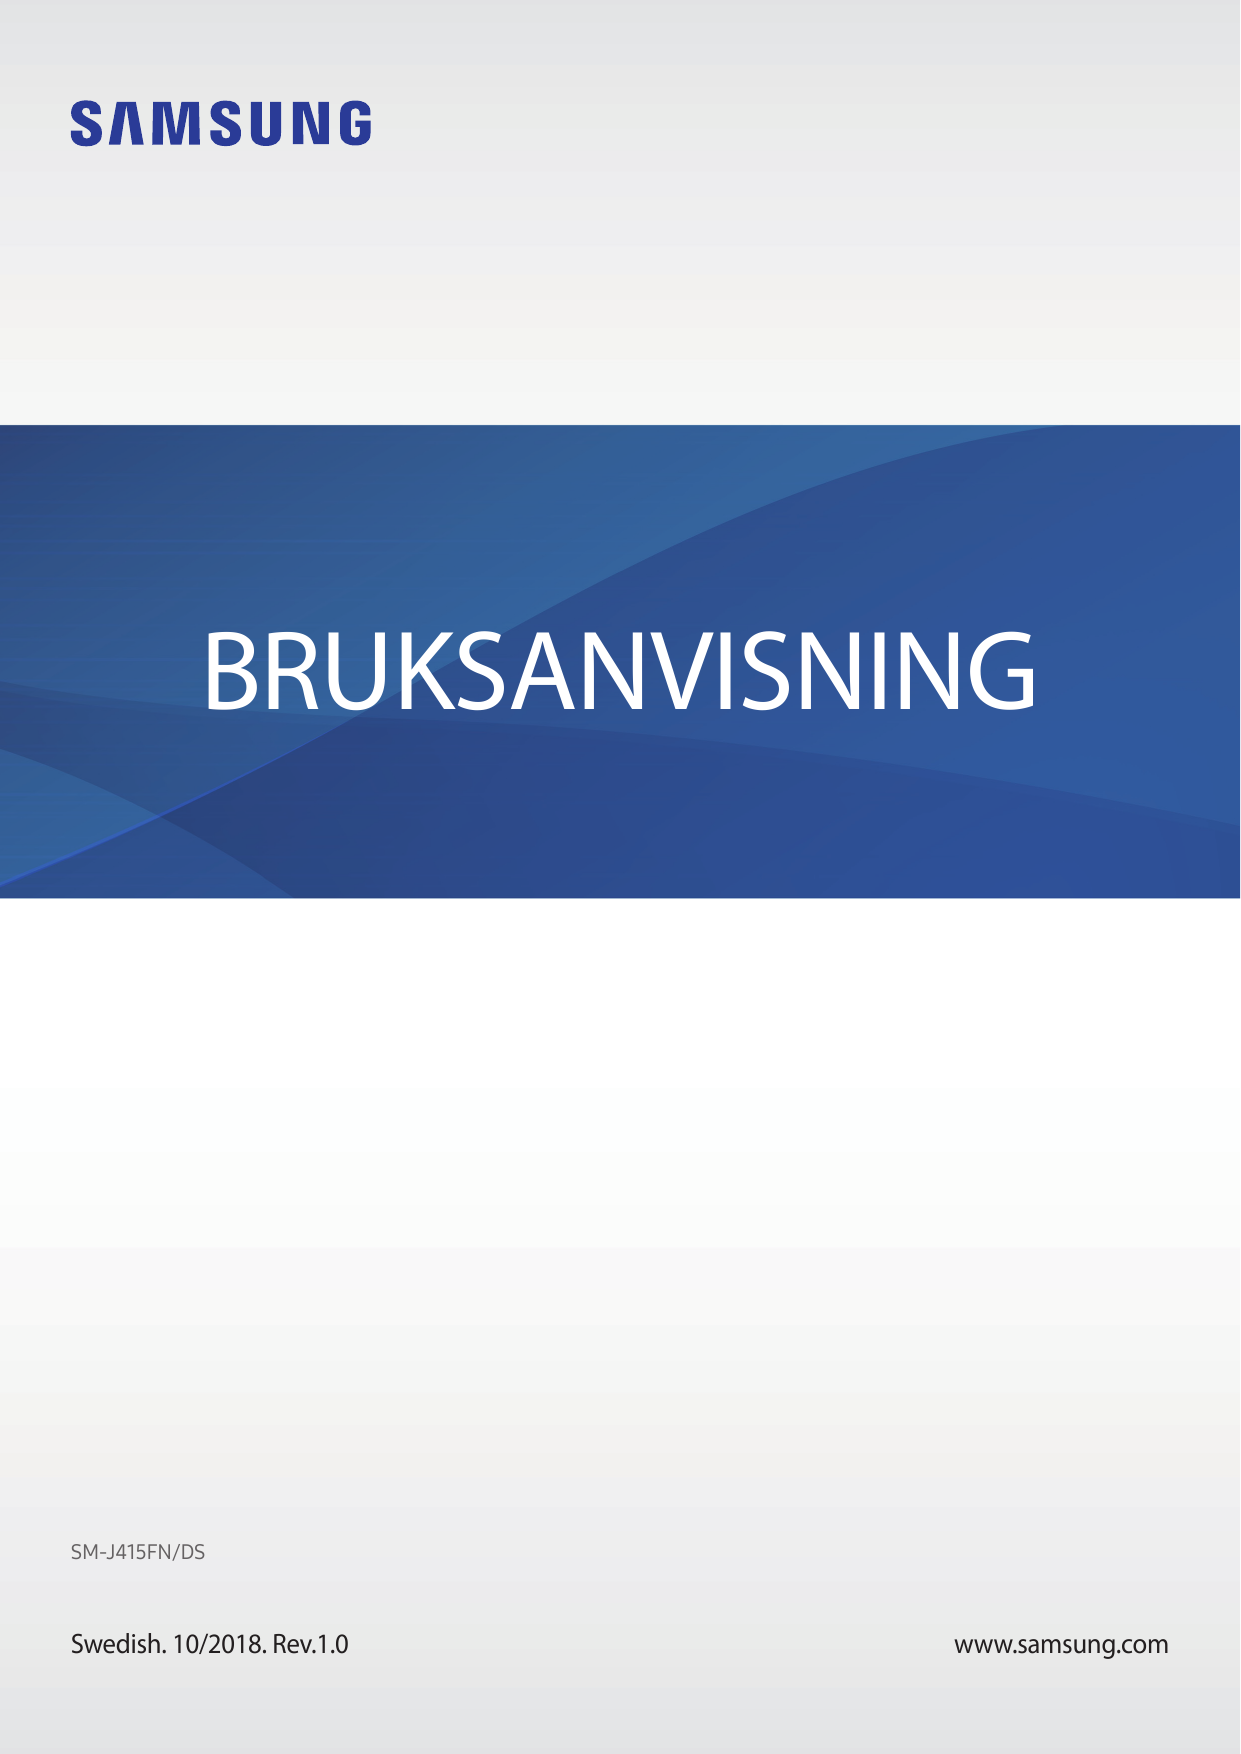 BRUKSANVISNINGSM-J415FN/DSSwedish. 10/2018. Rev.1.0www.samsung.com